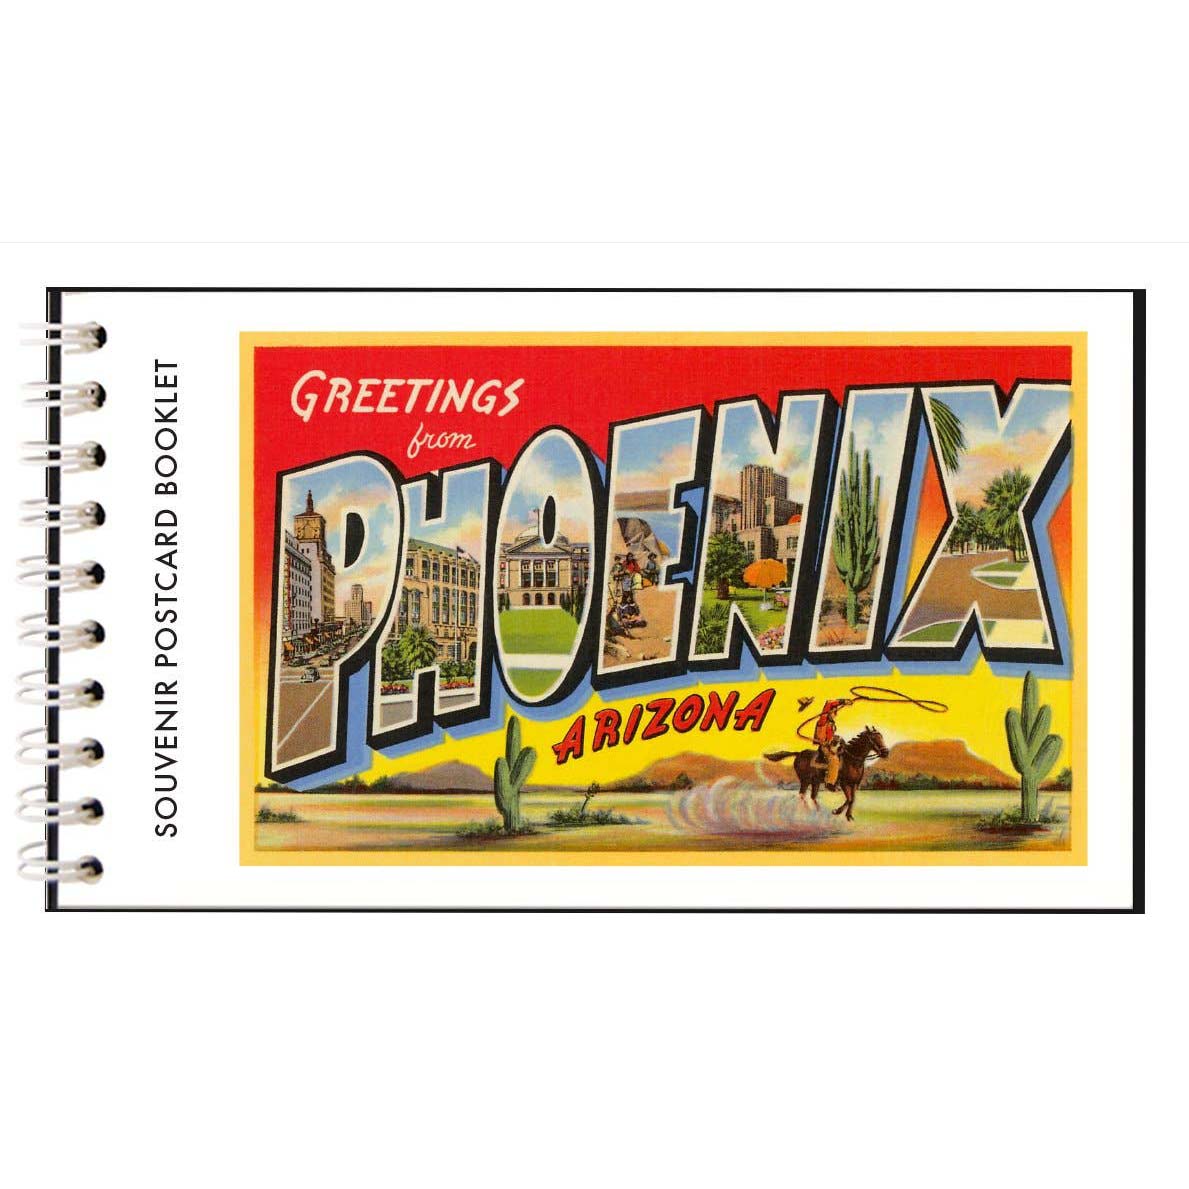 Phoenix Postcard Booklet- 8 postcards